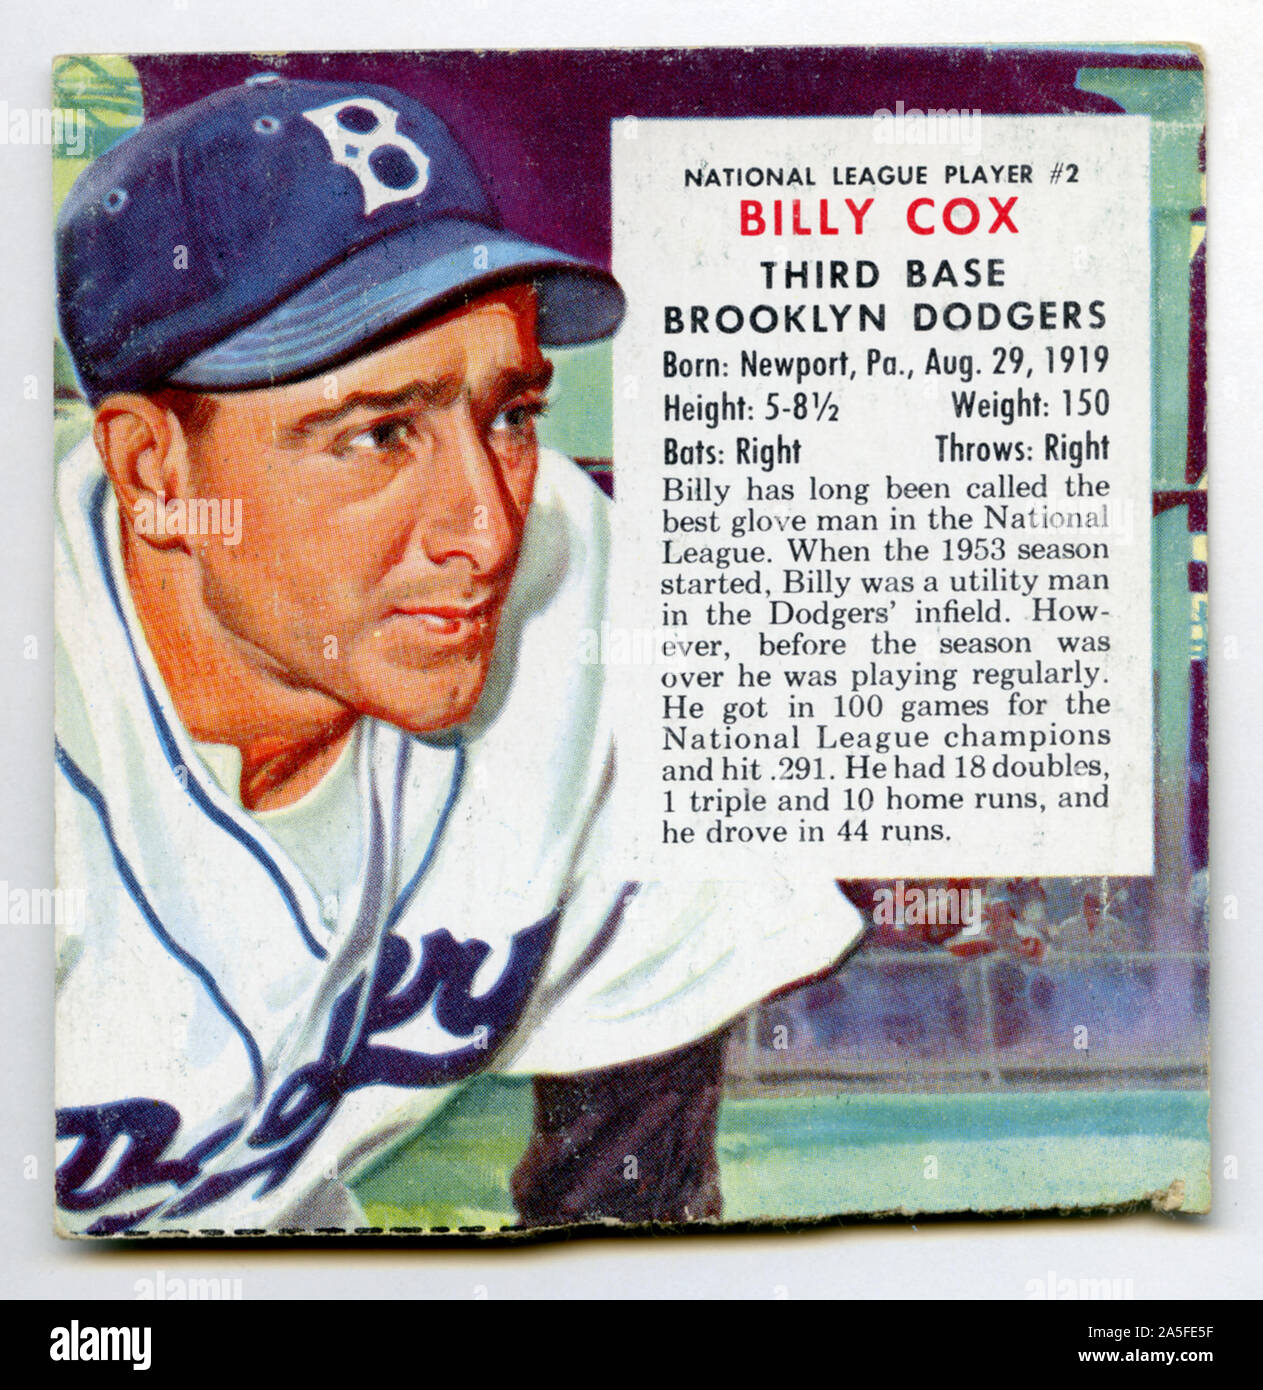 1950s era baseball card depicting Brooklyn Dodgers star player ...